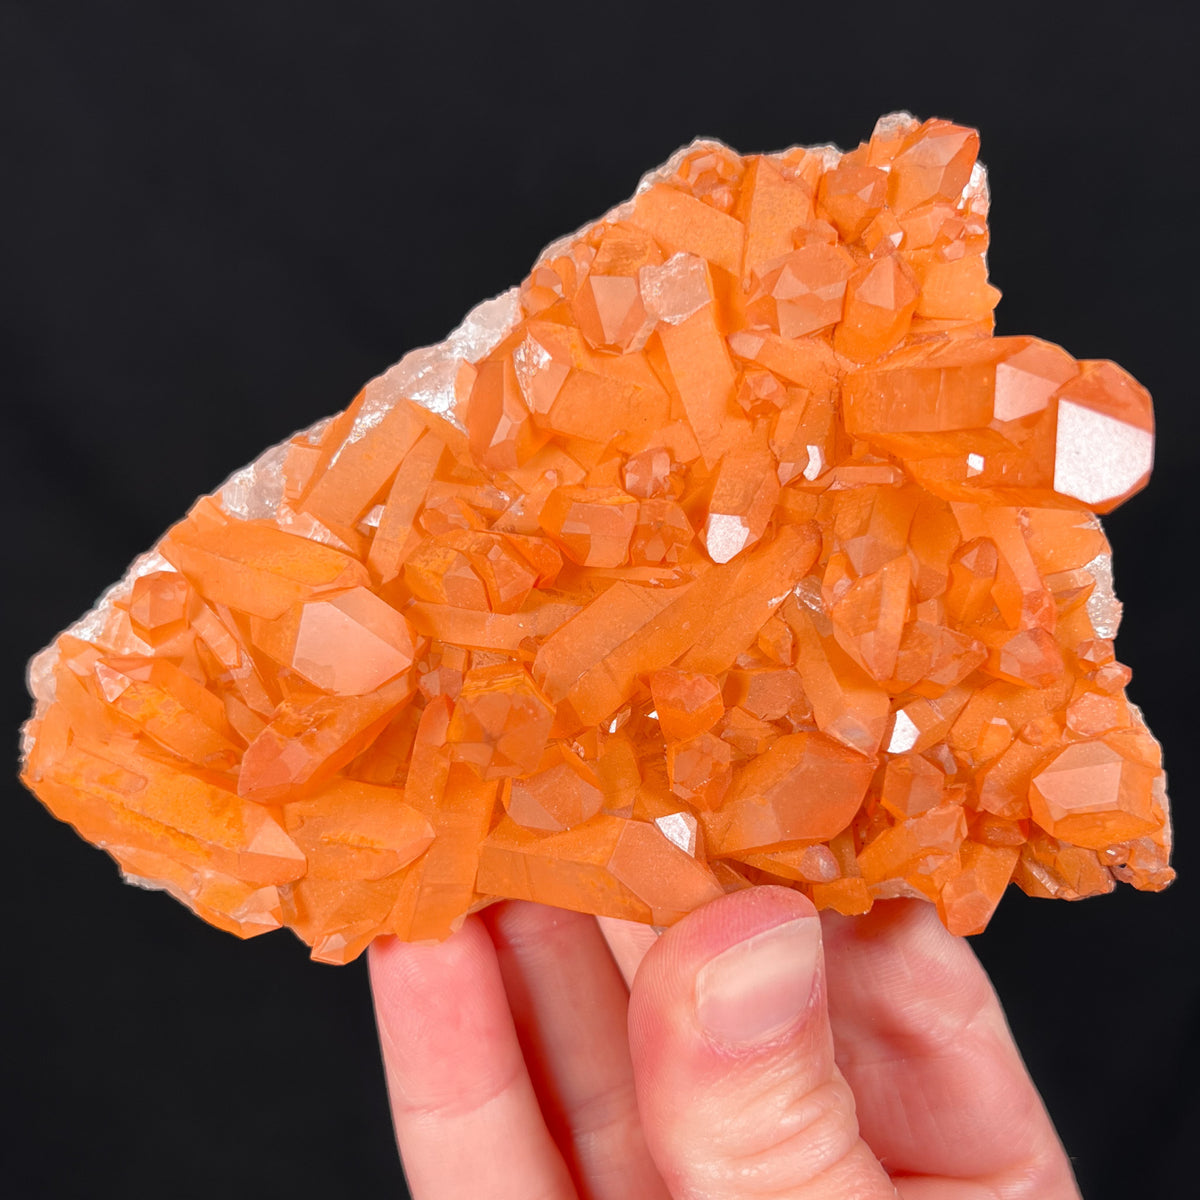 Orange Quartz Crystal Specimen with Iron Coating